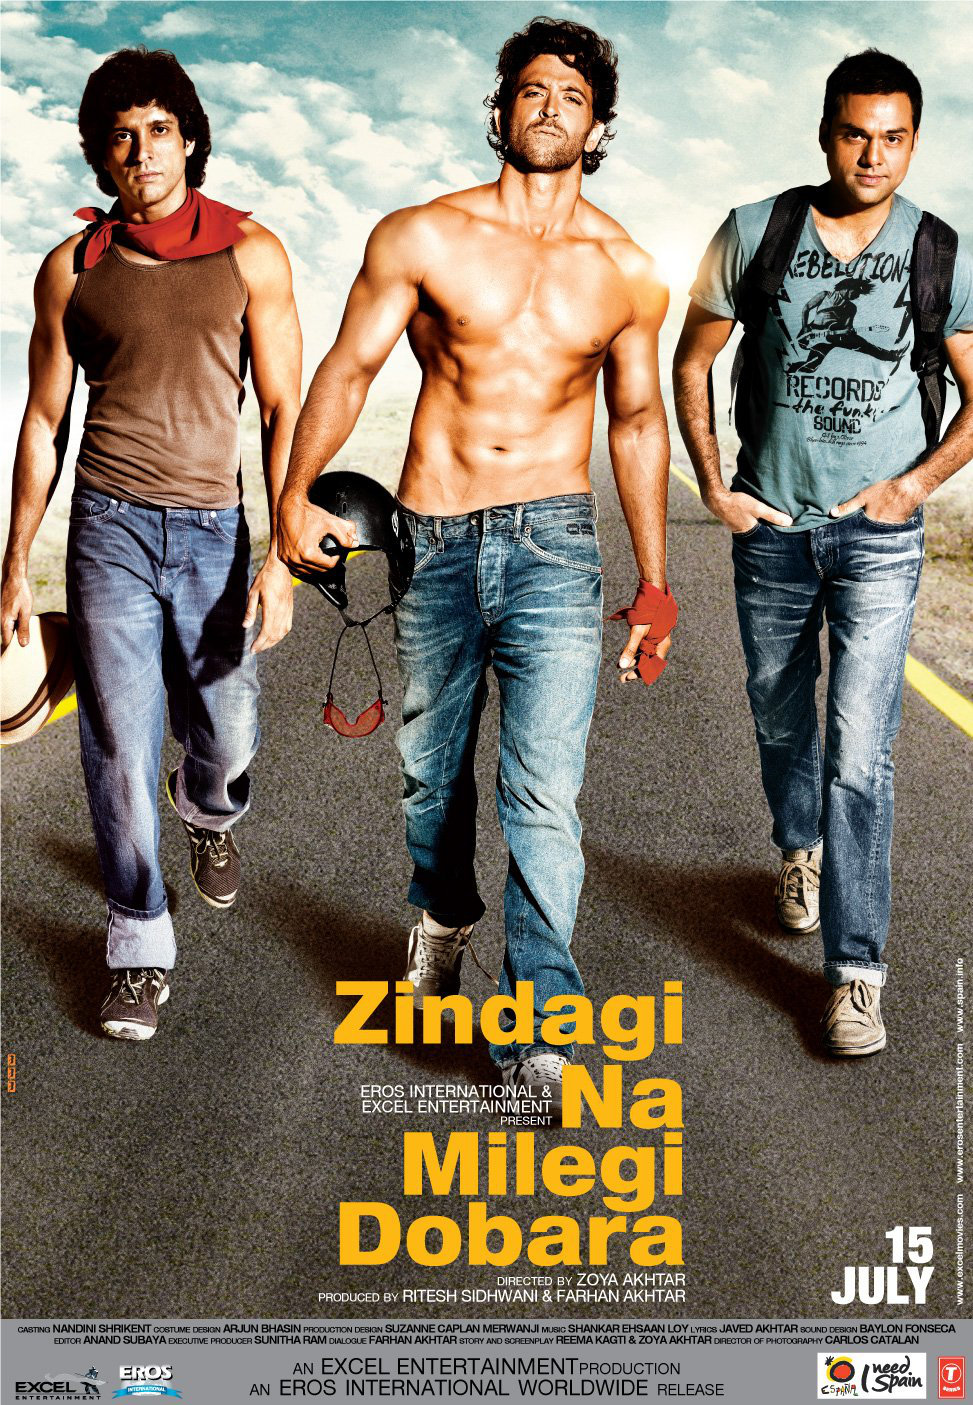 Poster of Eros Entertainment's Zindagi Na Milegi Dobara (2011)